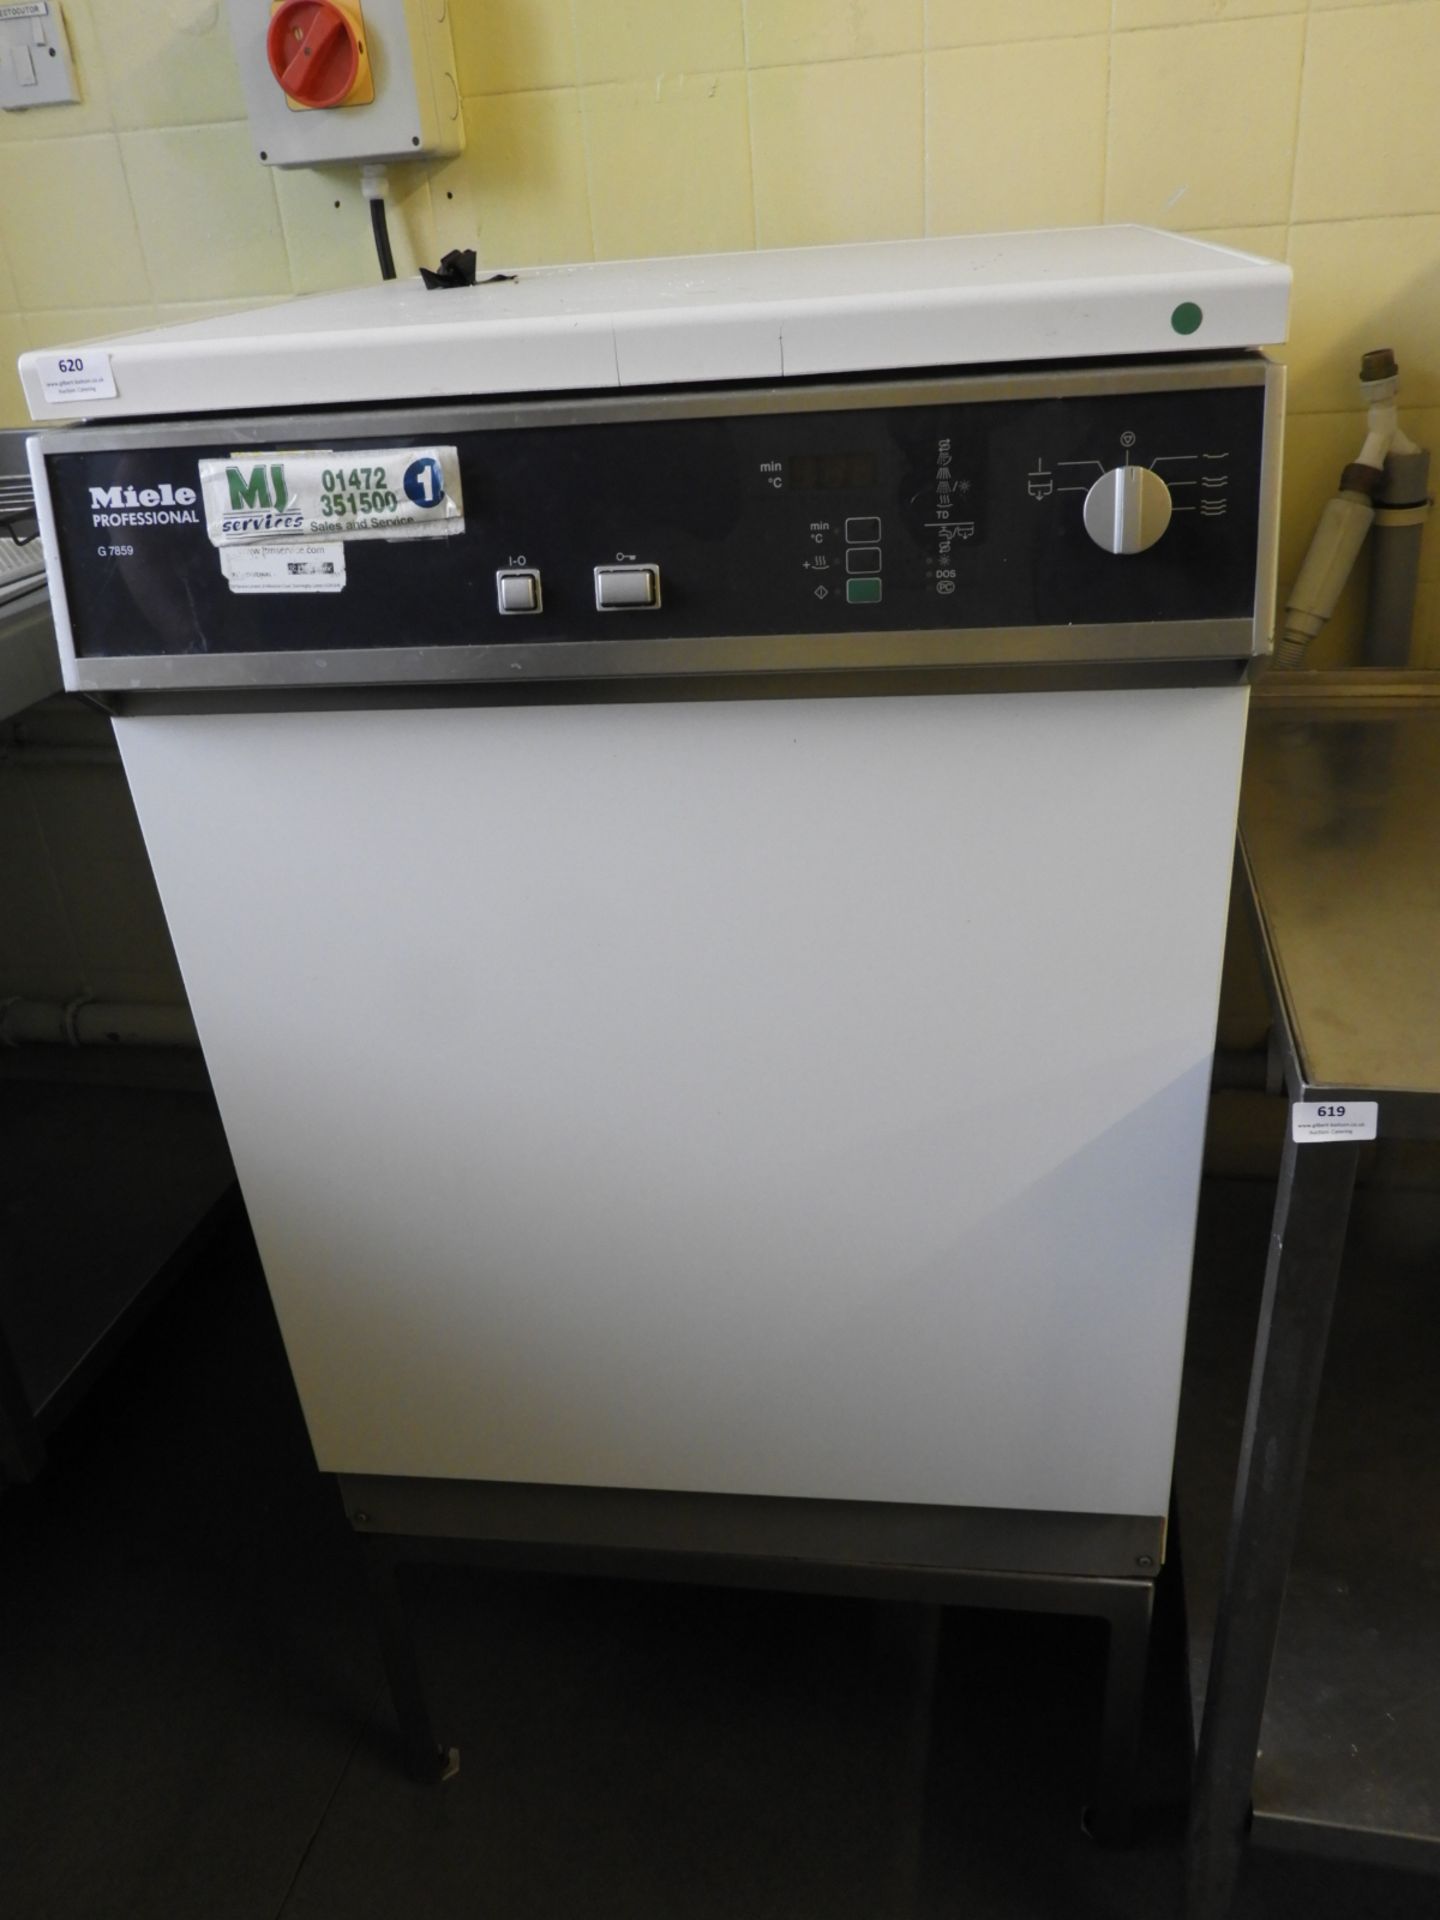 Melee Professional Dishwasher G7859